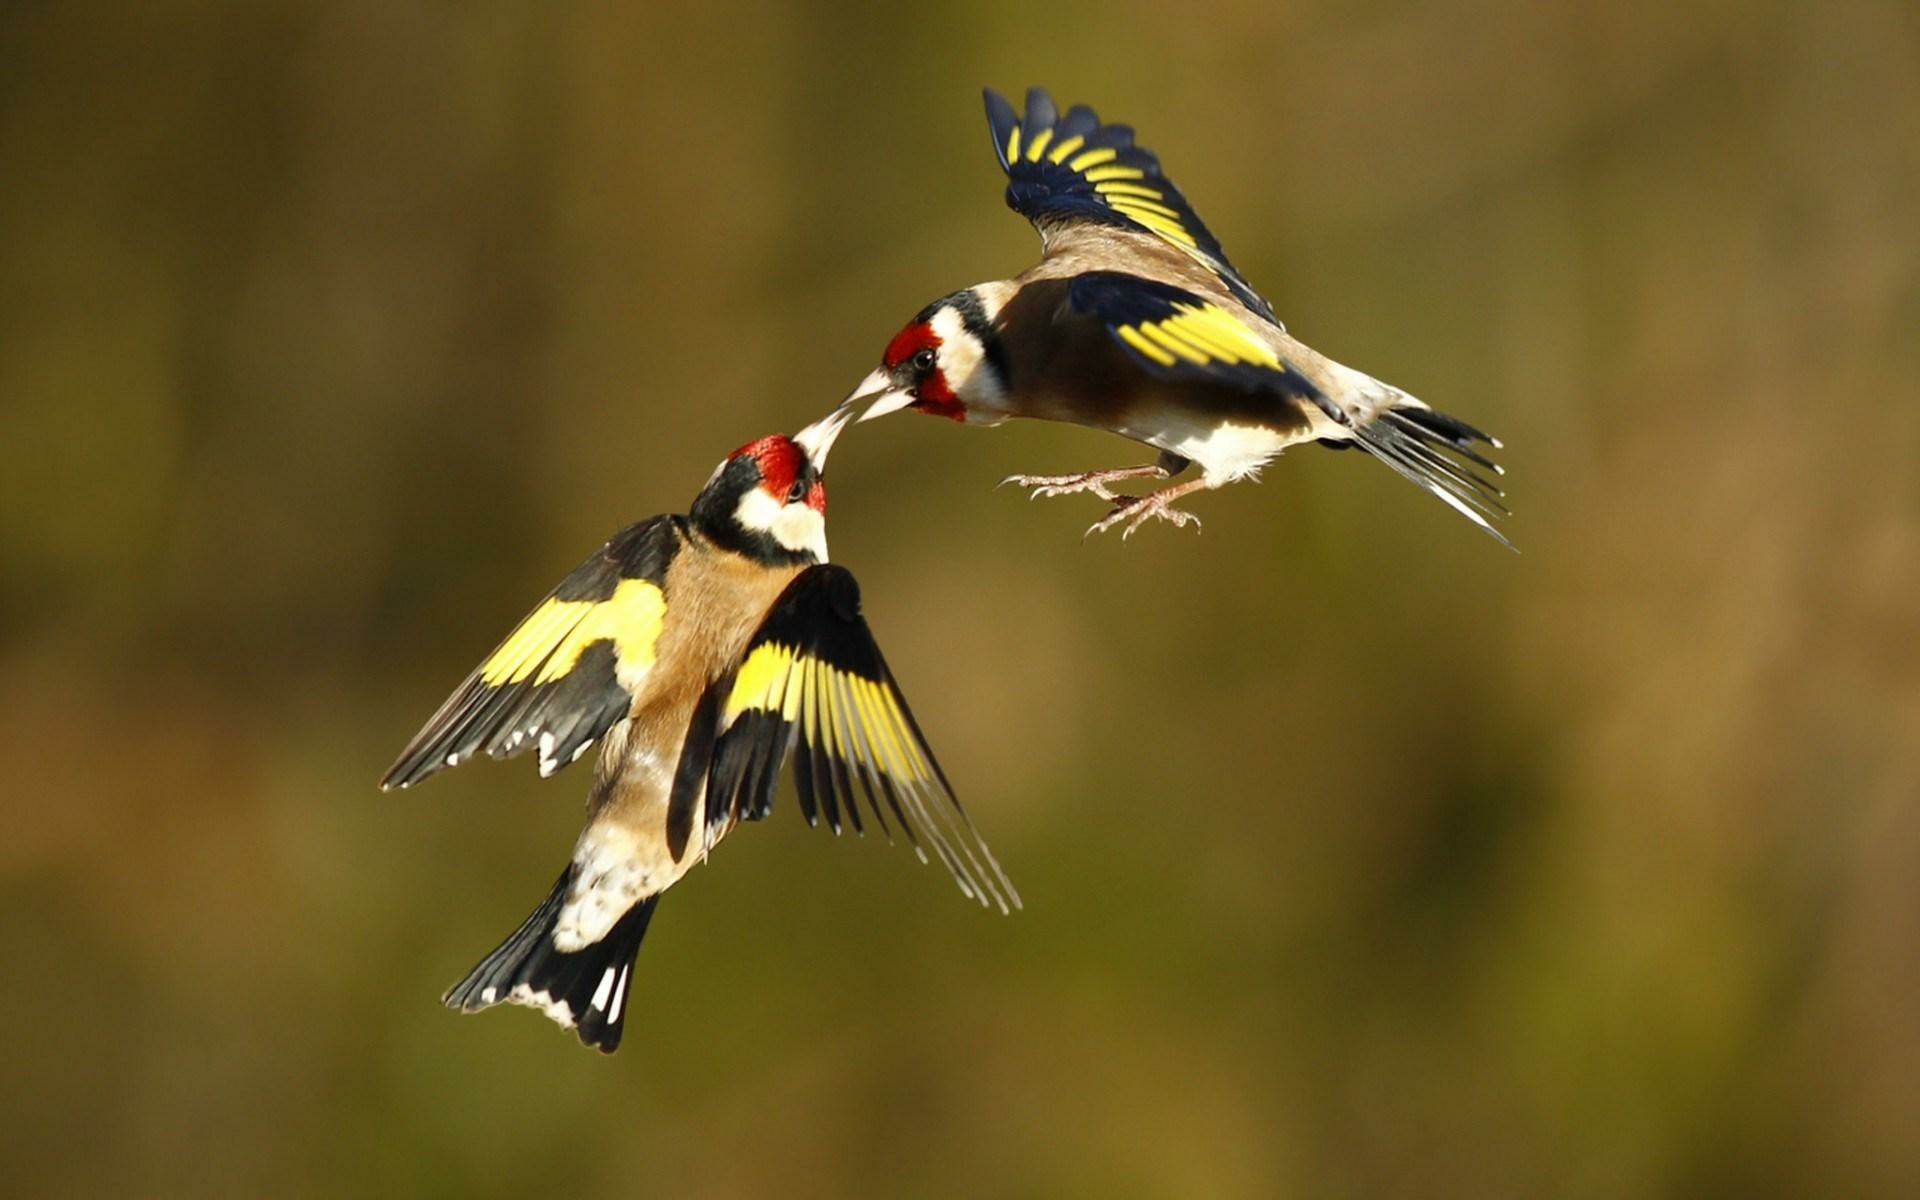 goldfinch flying